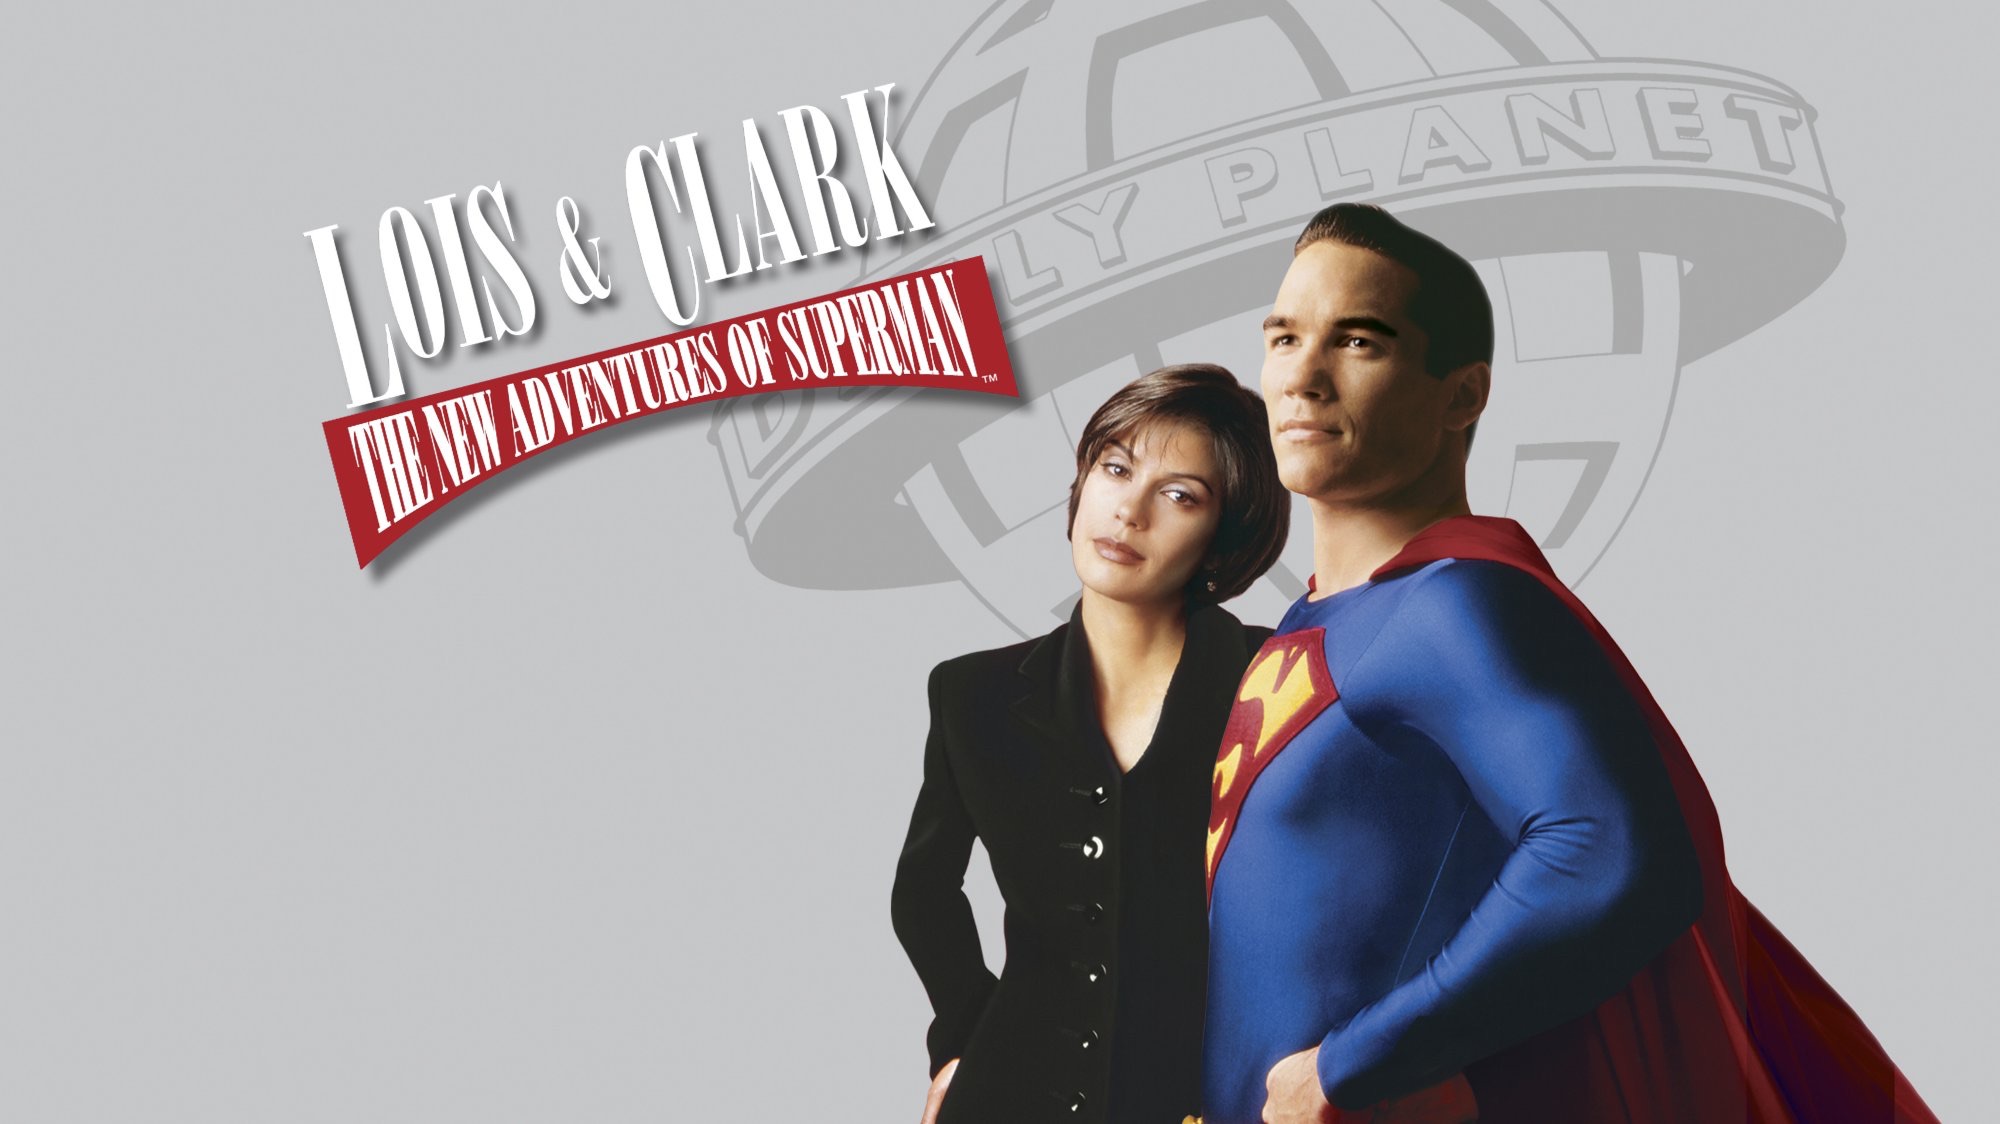 Lois and clark the new adventures of superman hd lois lane teri hatcher superman clark kent dean cain